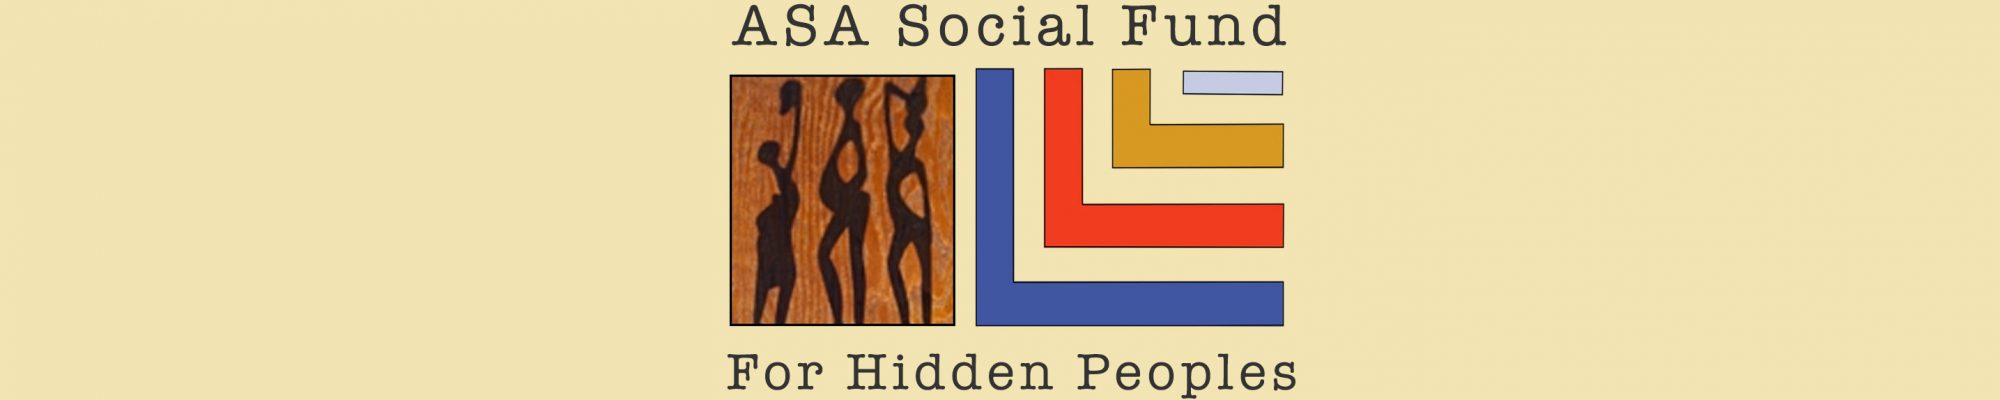 ASA-banner-new-logo-thin